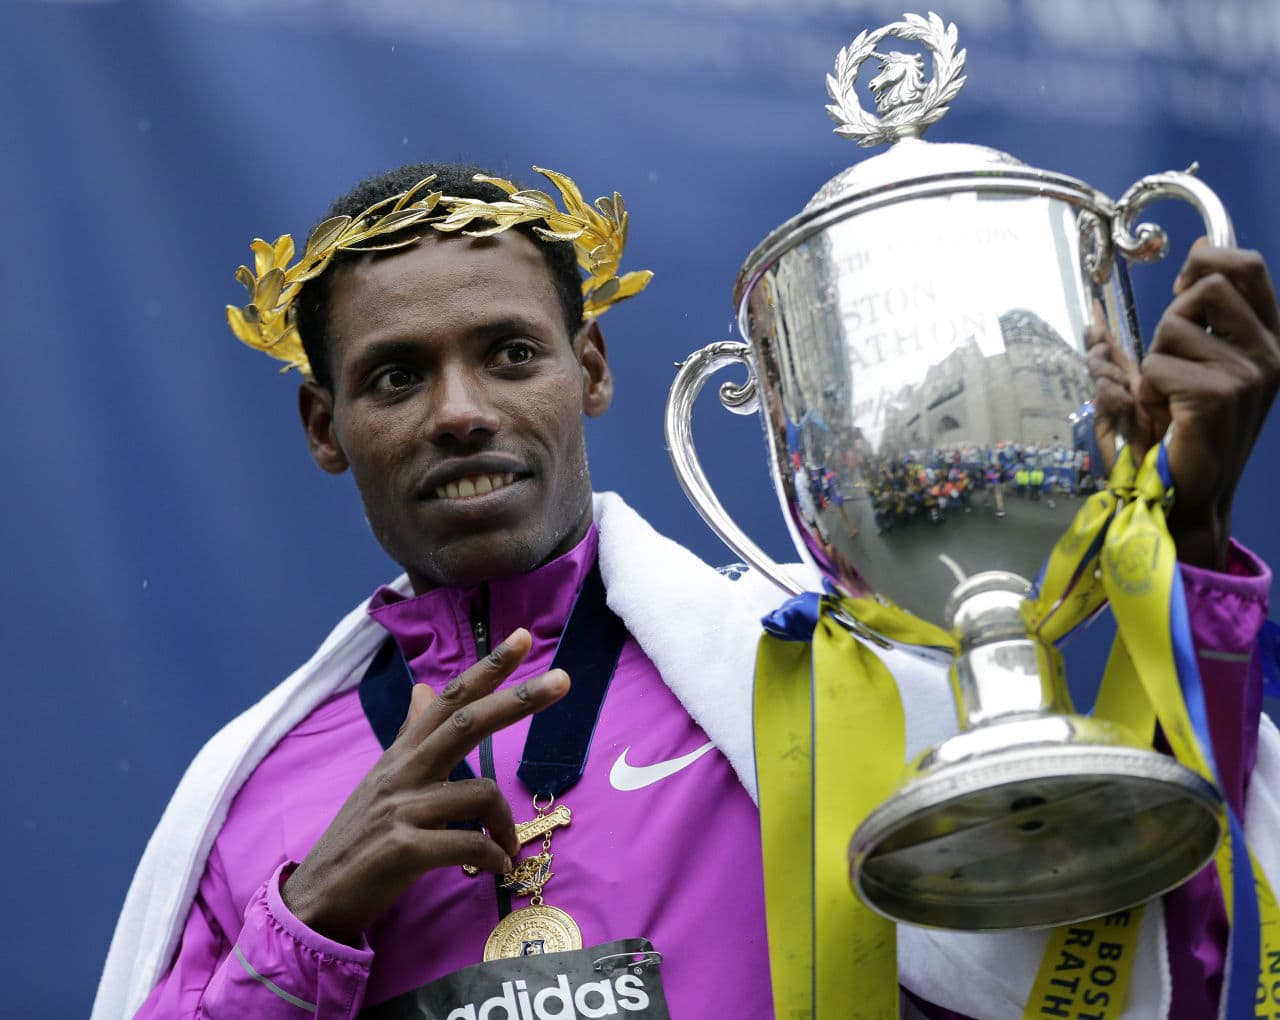 Lelisa Desisa holds his trophy after winning the 119th Boston Marathon. (Elise Amendola/AP)